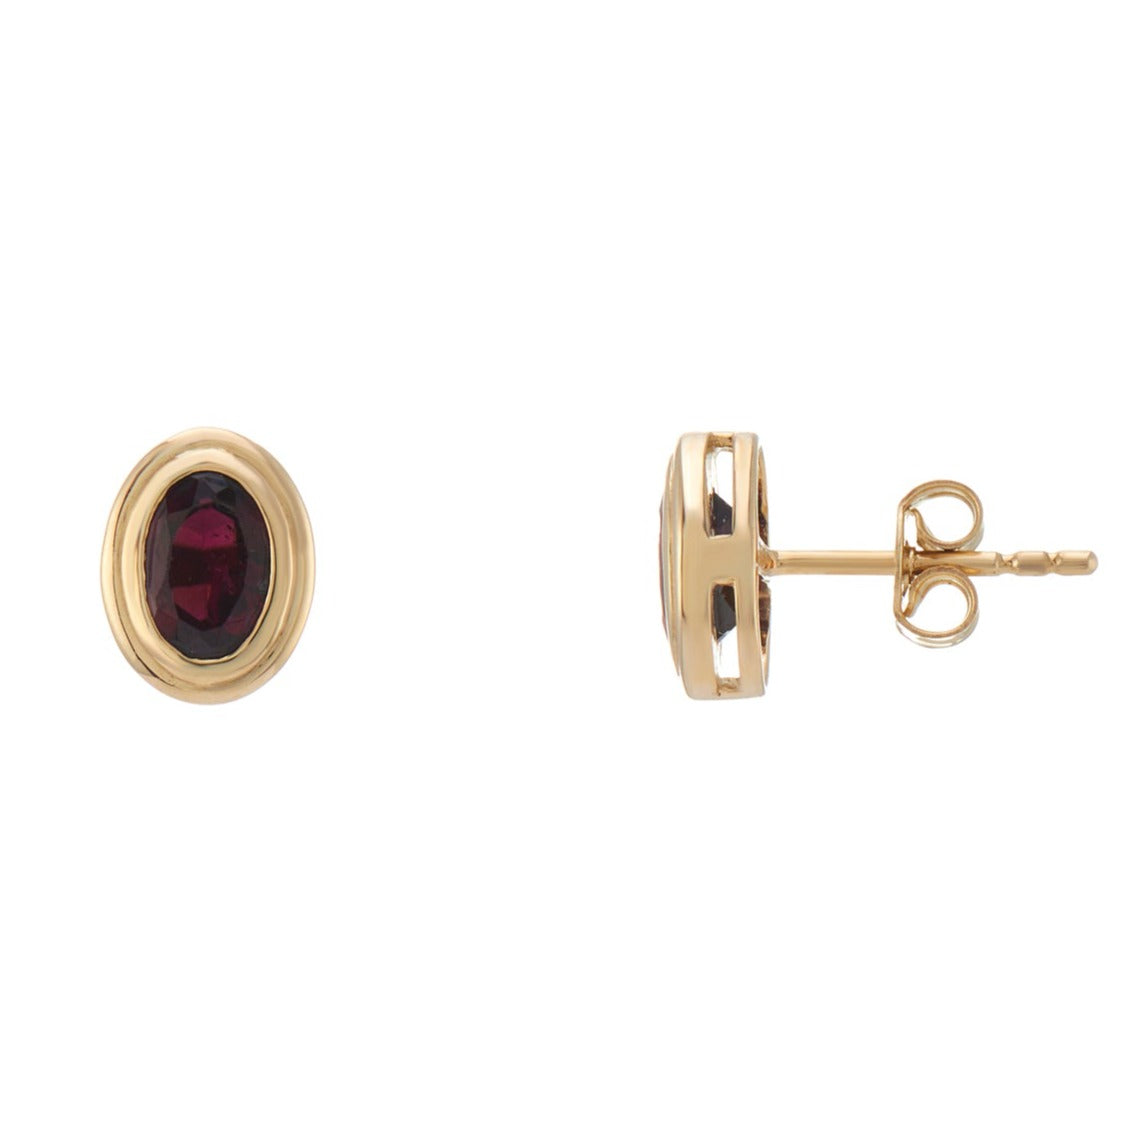 9ct gold 6x4mm oval rub over set garnet stud earrings